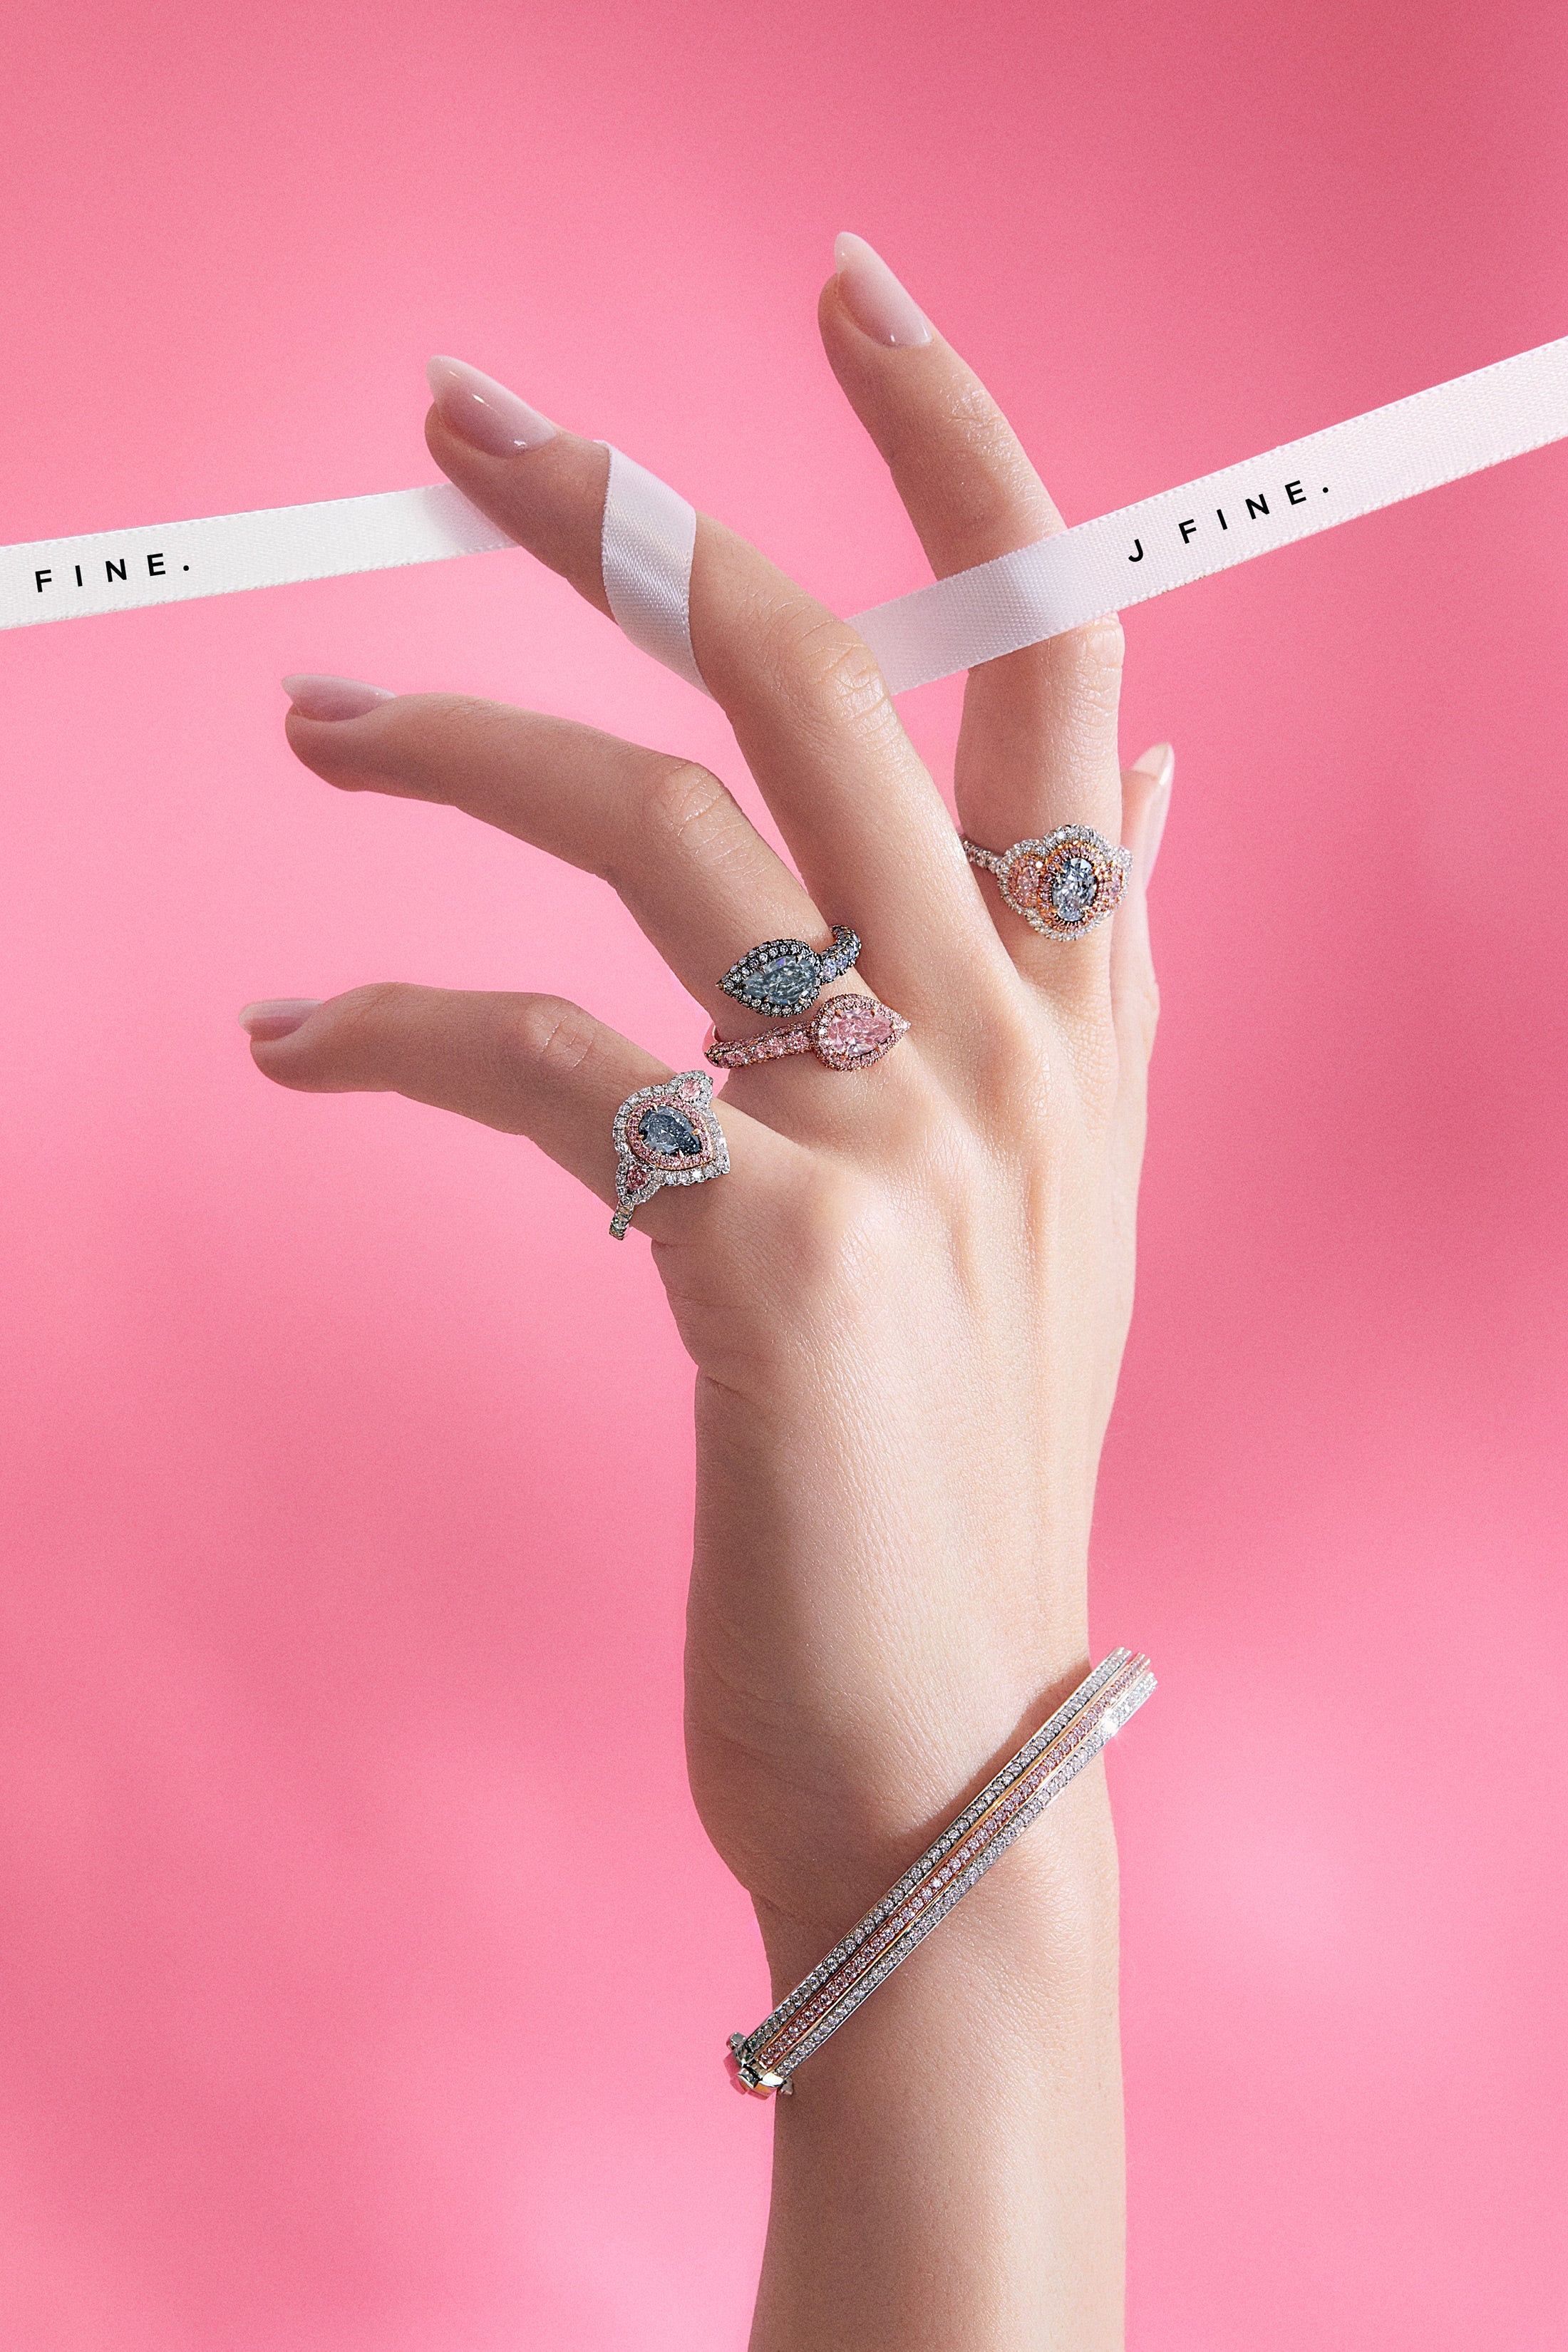 Argyle Pink™ Diamond Three Row Cuff Bracelet - Pink Diamonds, J FINE - J Fine, bracelet - Pink Diamond Jewelry, argyle-pink™-diamond-three-row-cuff-bracelet-by-j-fine - Argyle Pink Diamon